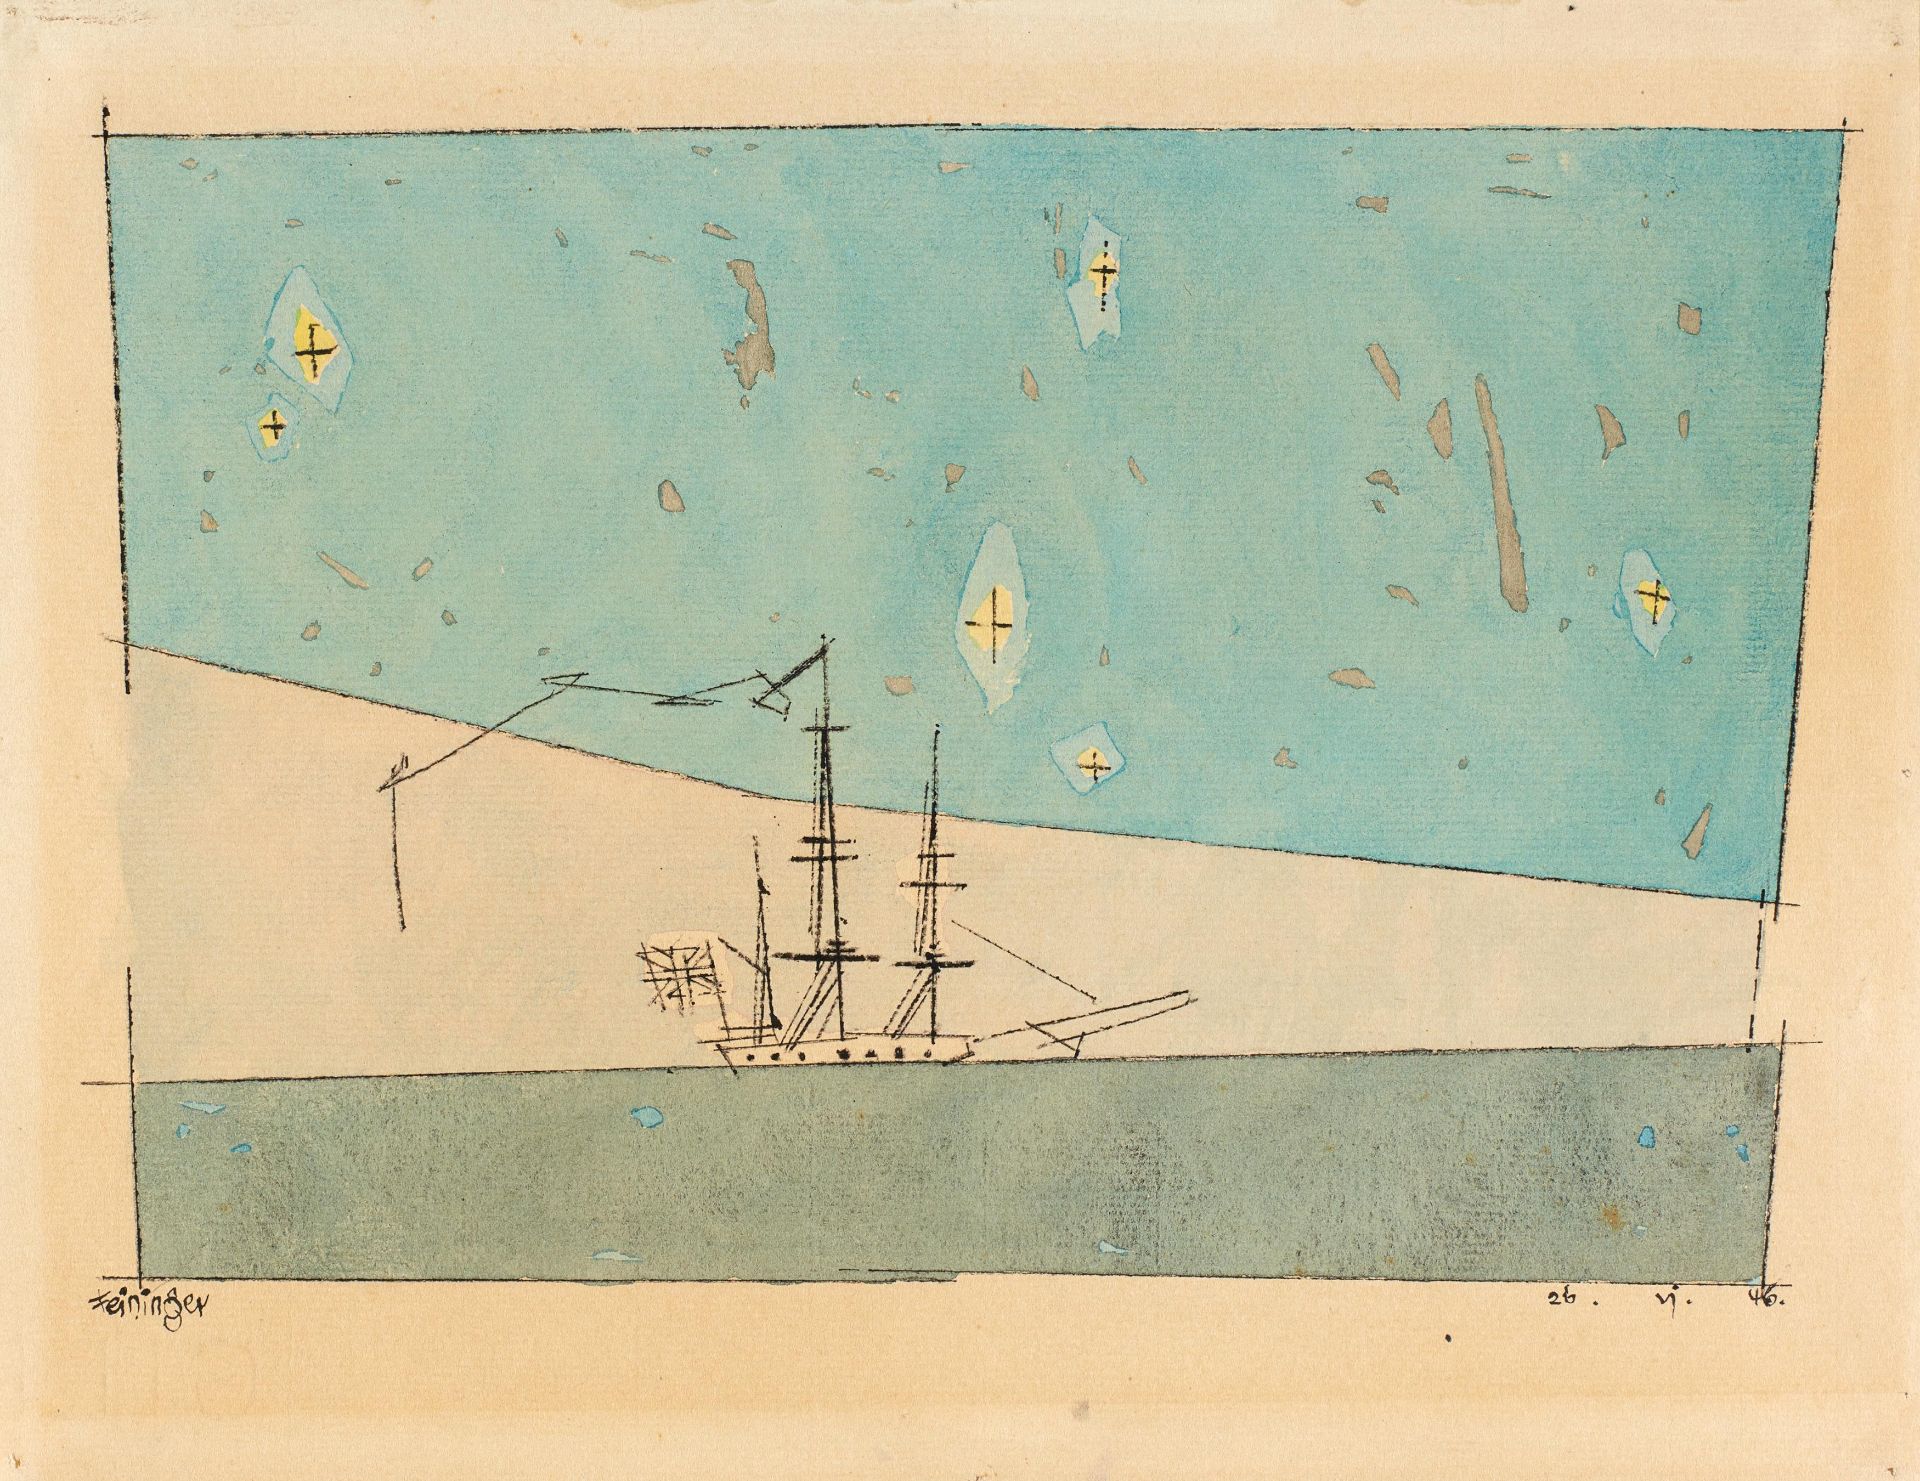 Feininger, Lyonel New York 1871 - 1956 Sailing Ship. 1946. Tinte und Aquarell auf Maschinenbütten. - Image 2 of 2